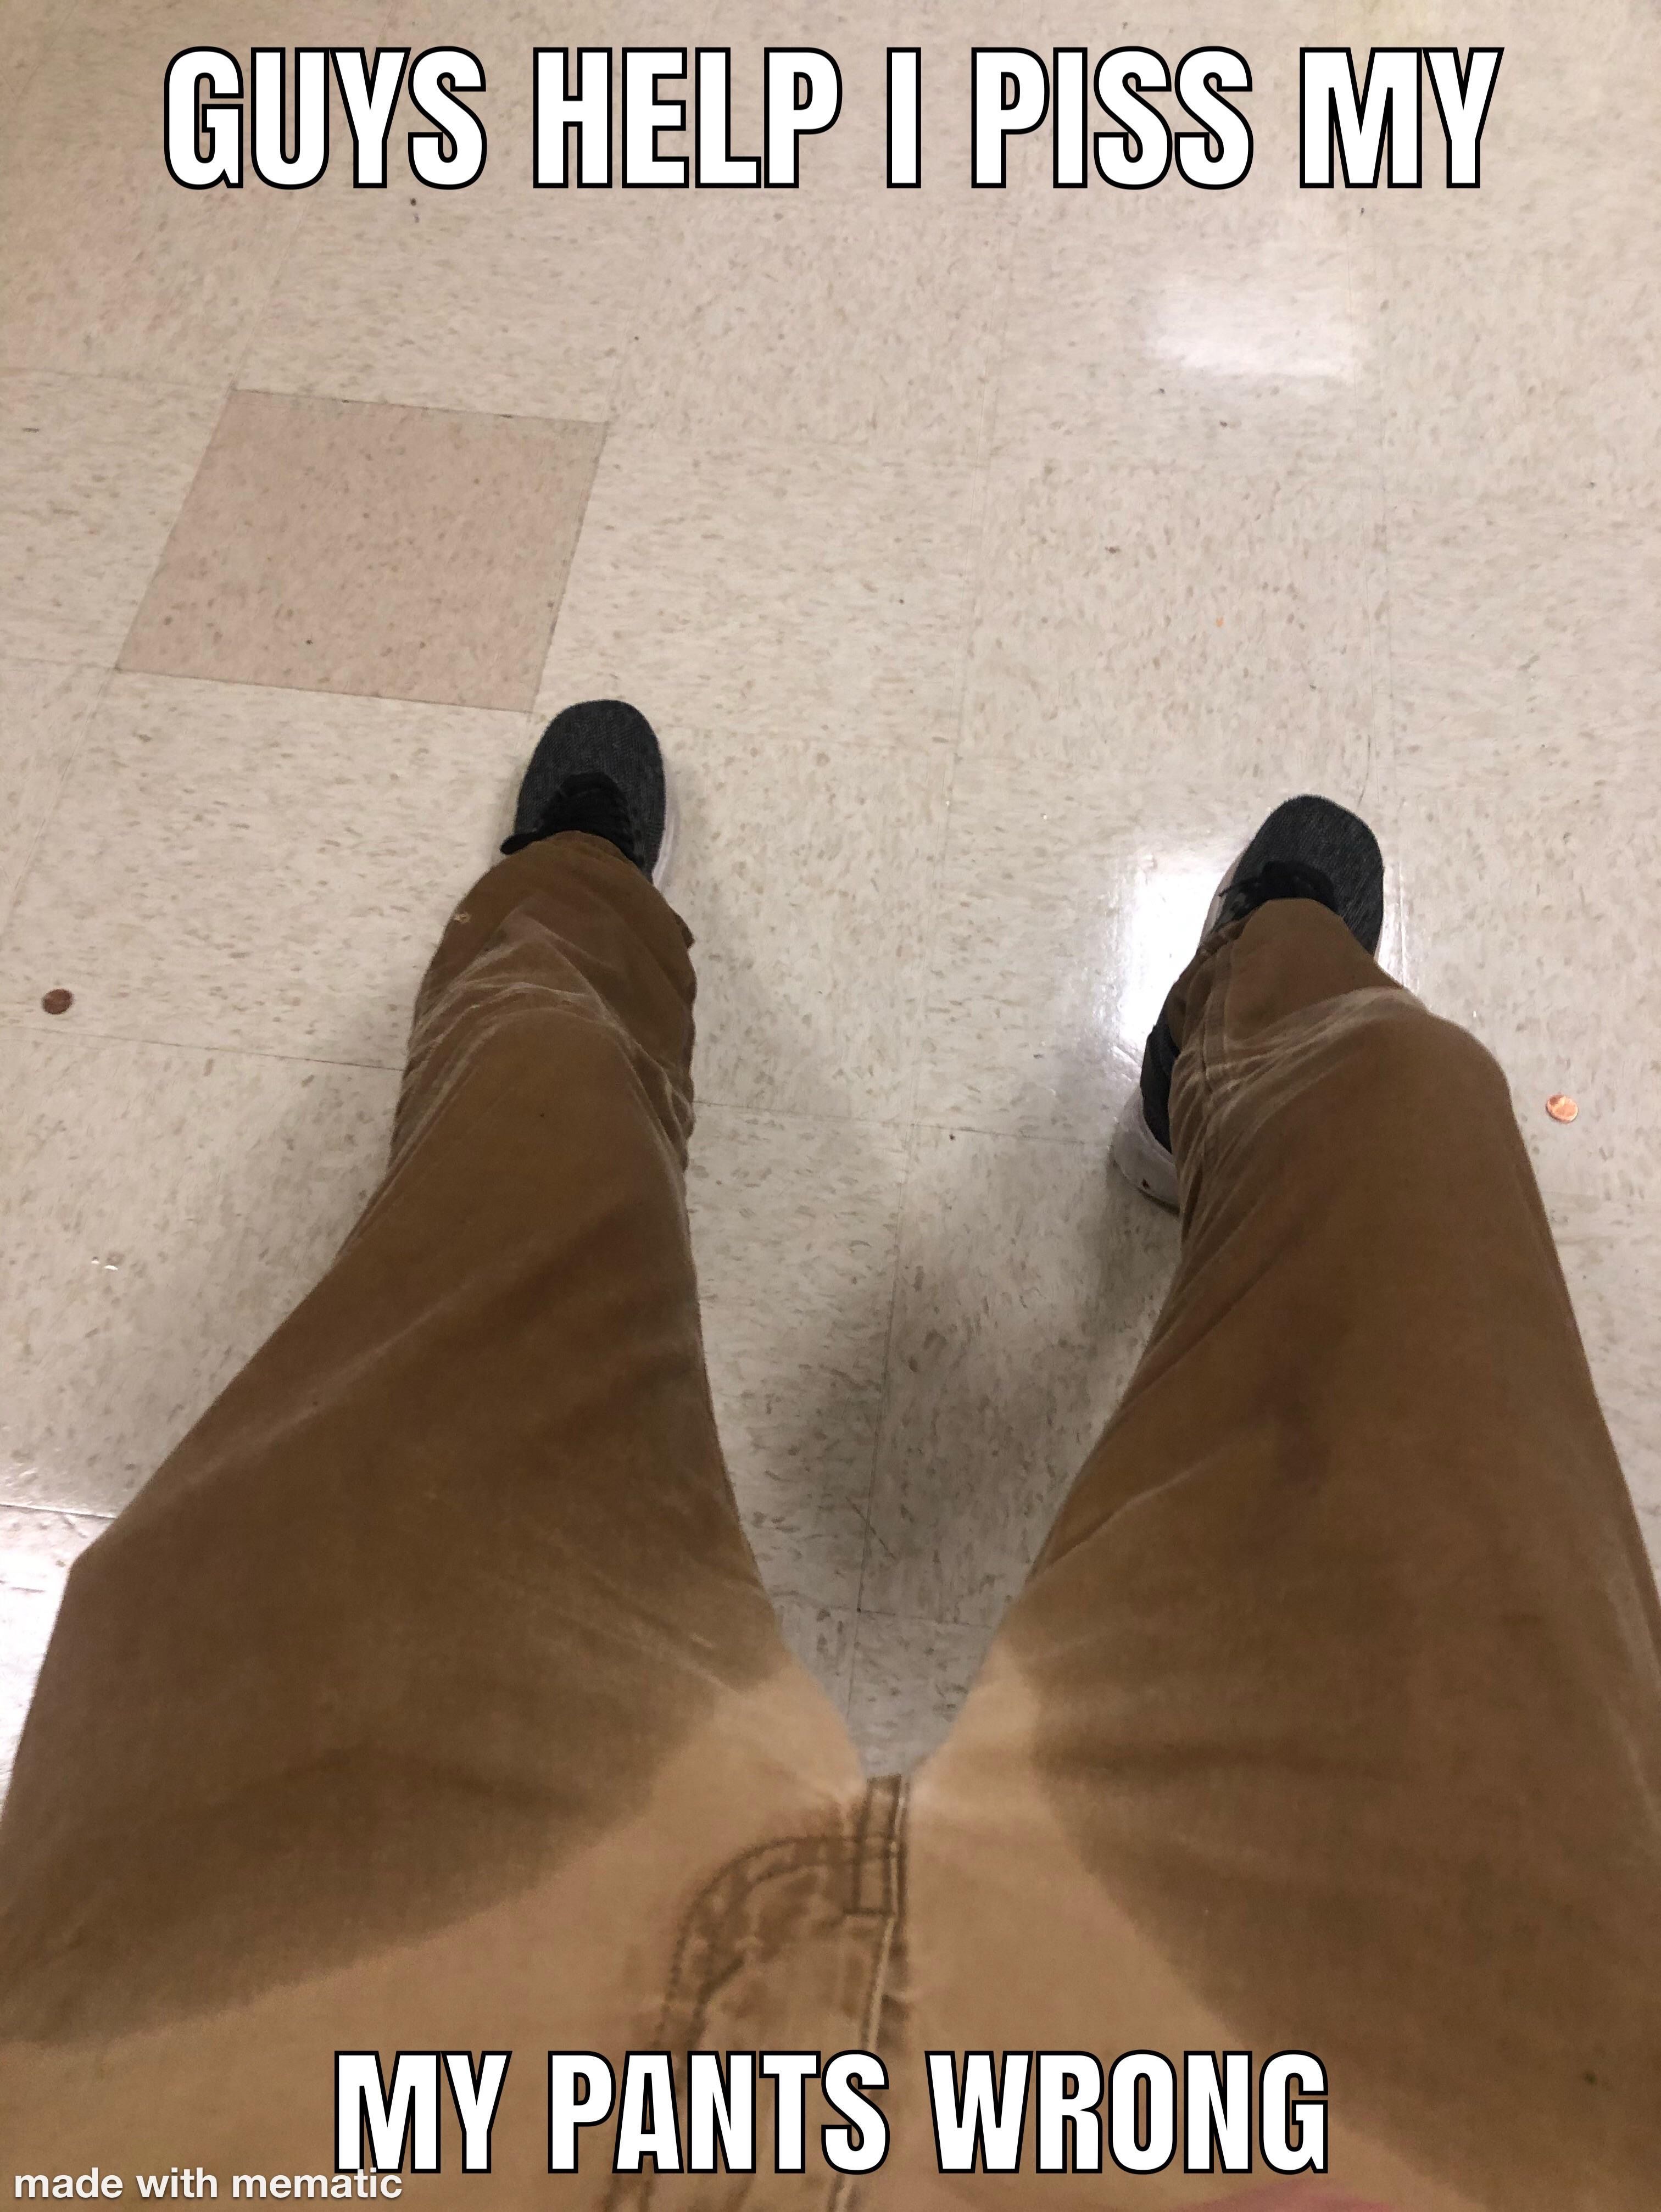 Who shit my pants?